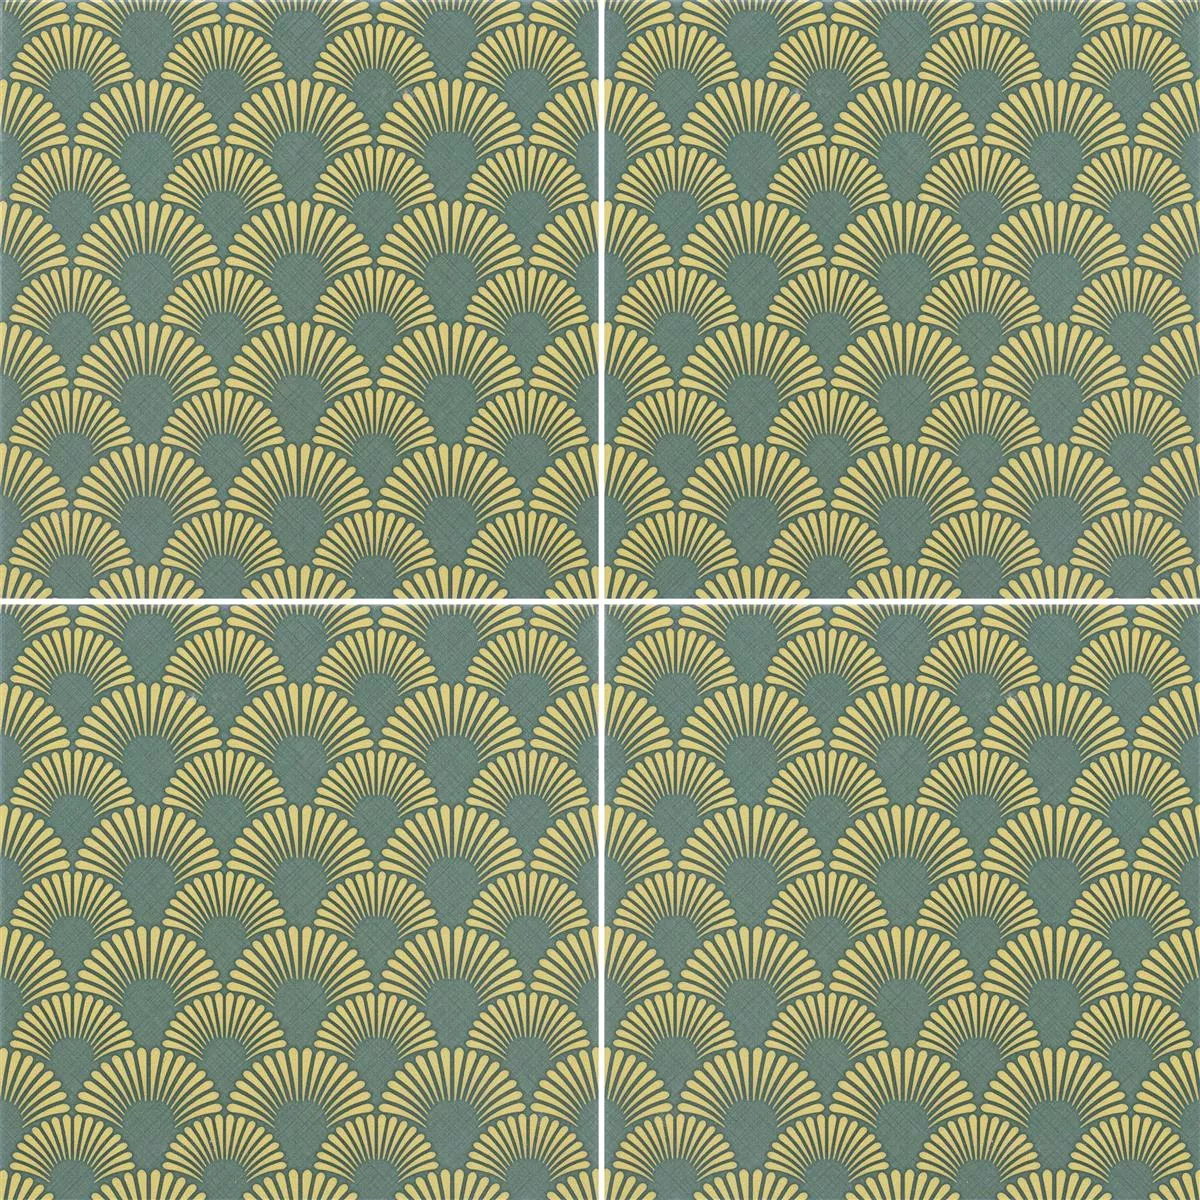 Плочки За Под Циментов Bид Wildflower Зелено Декор 18,5x18,5cm 